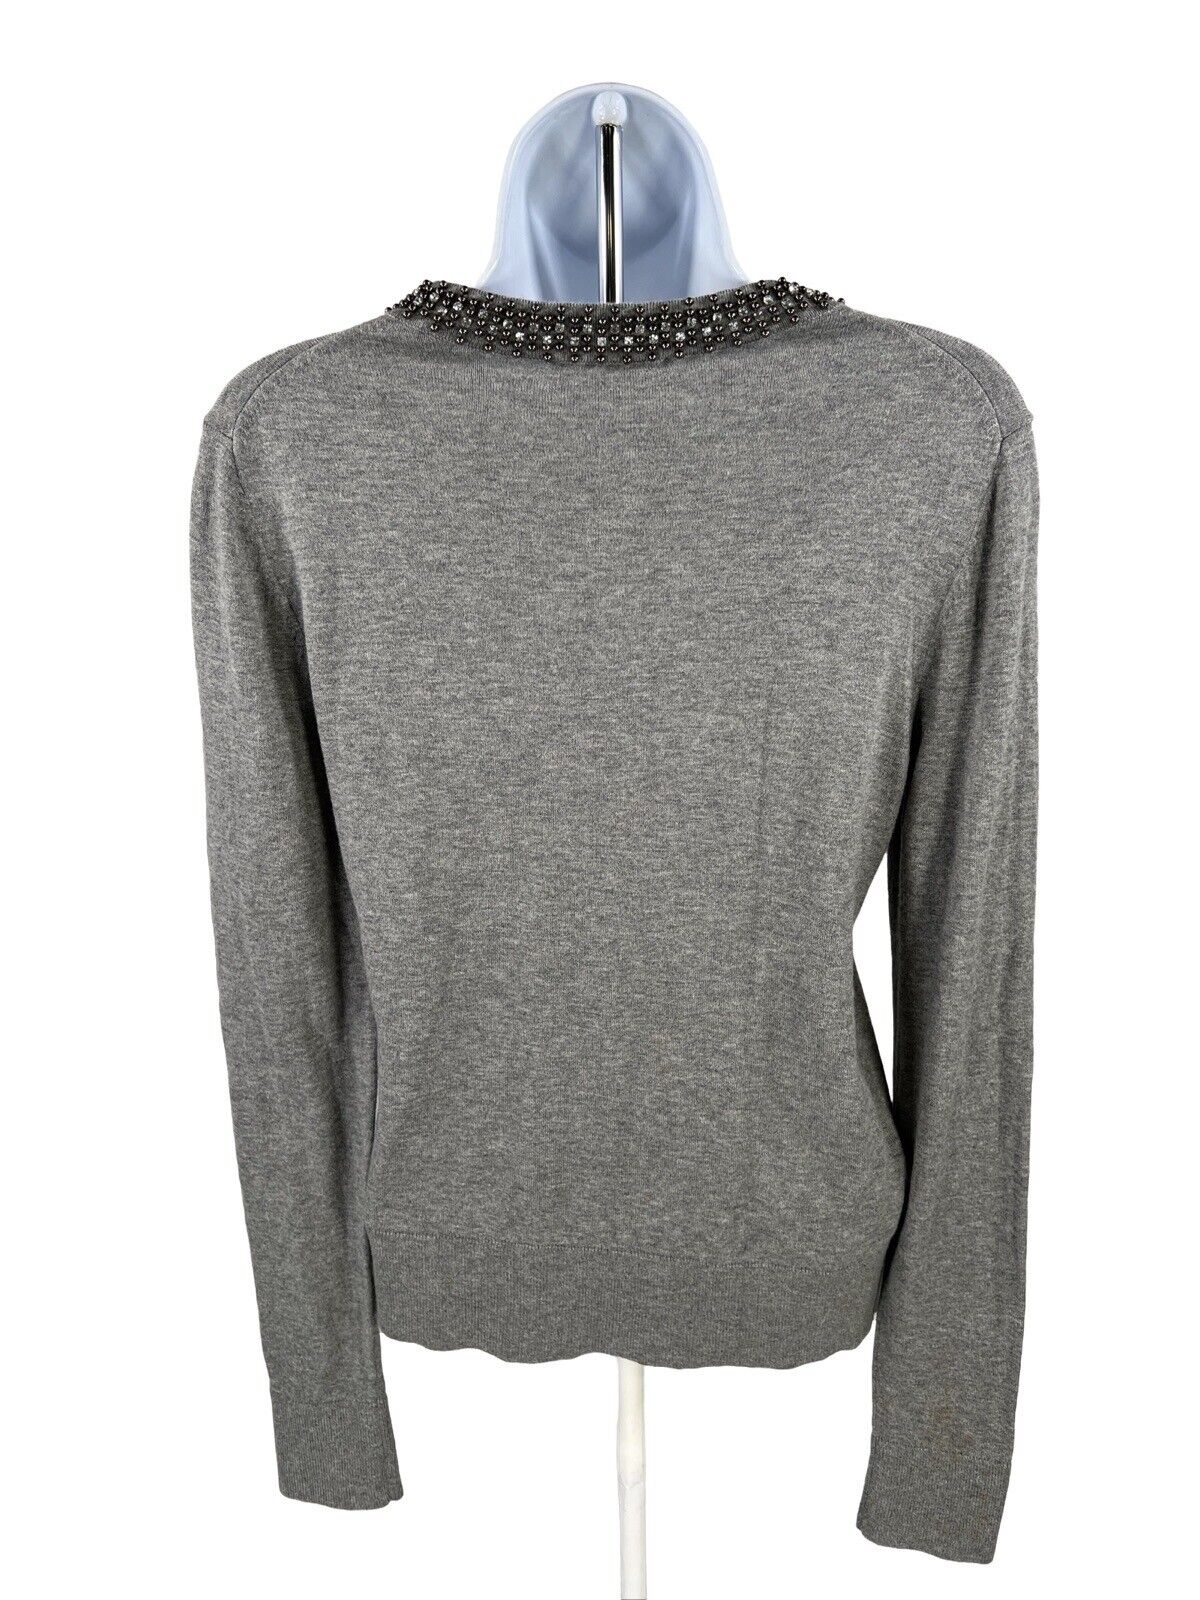 Ann Taylor Women's Gray Beaded Neck Long Sleeve Cardigan Sweater - M